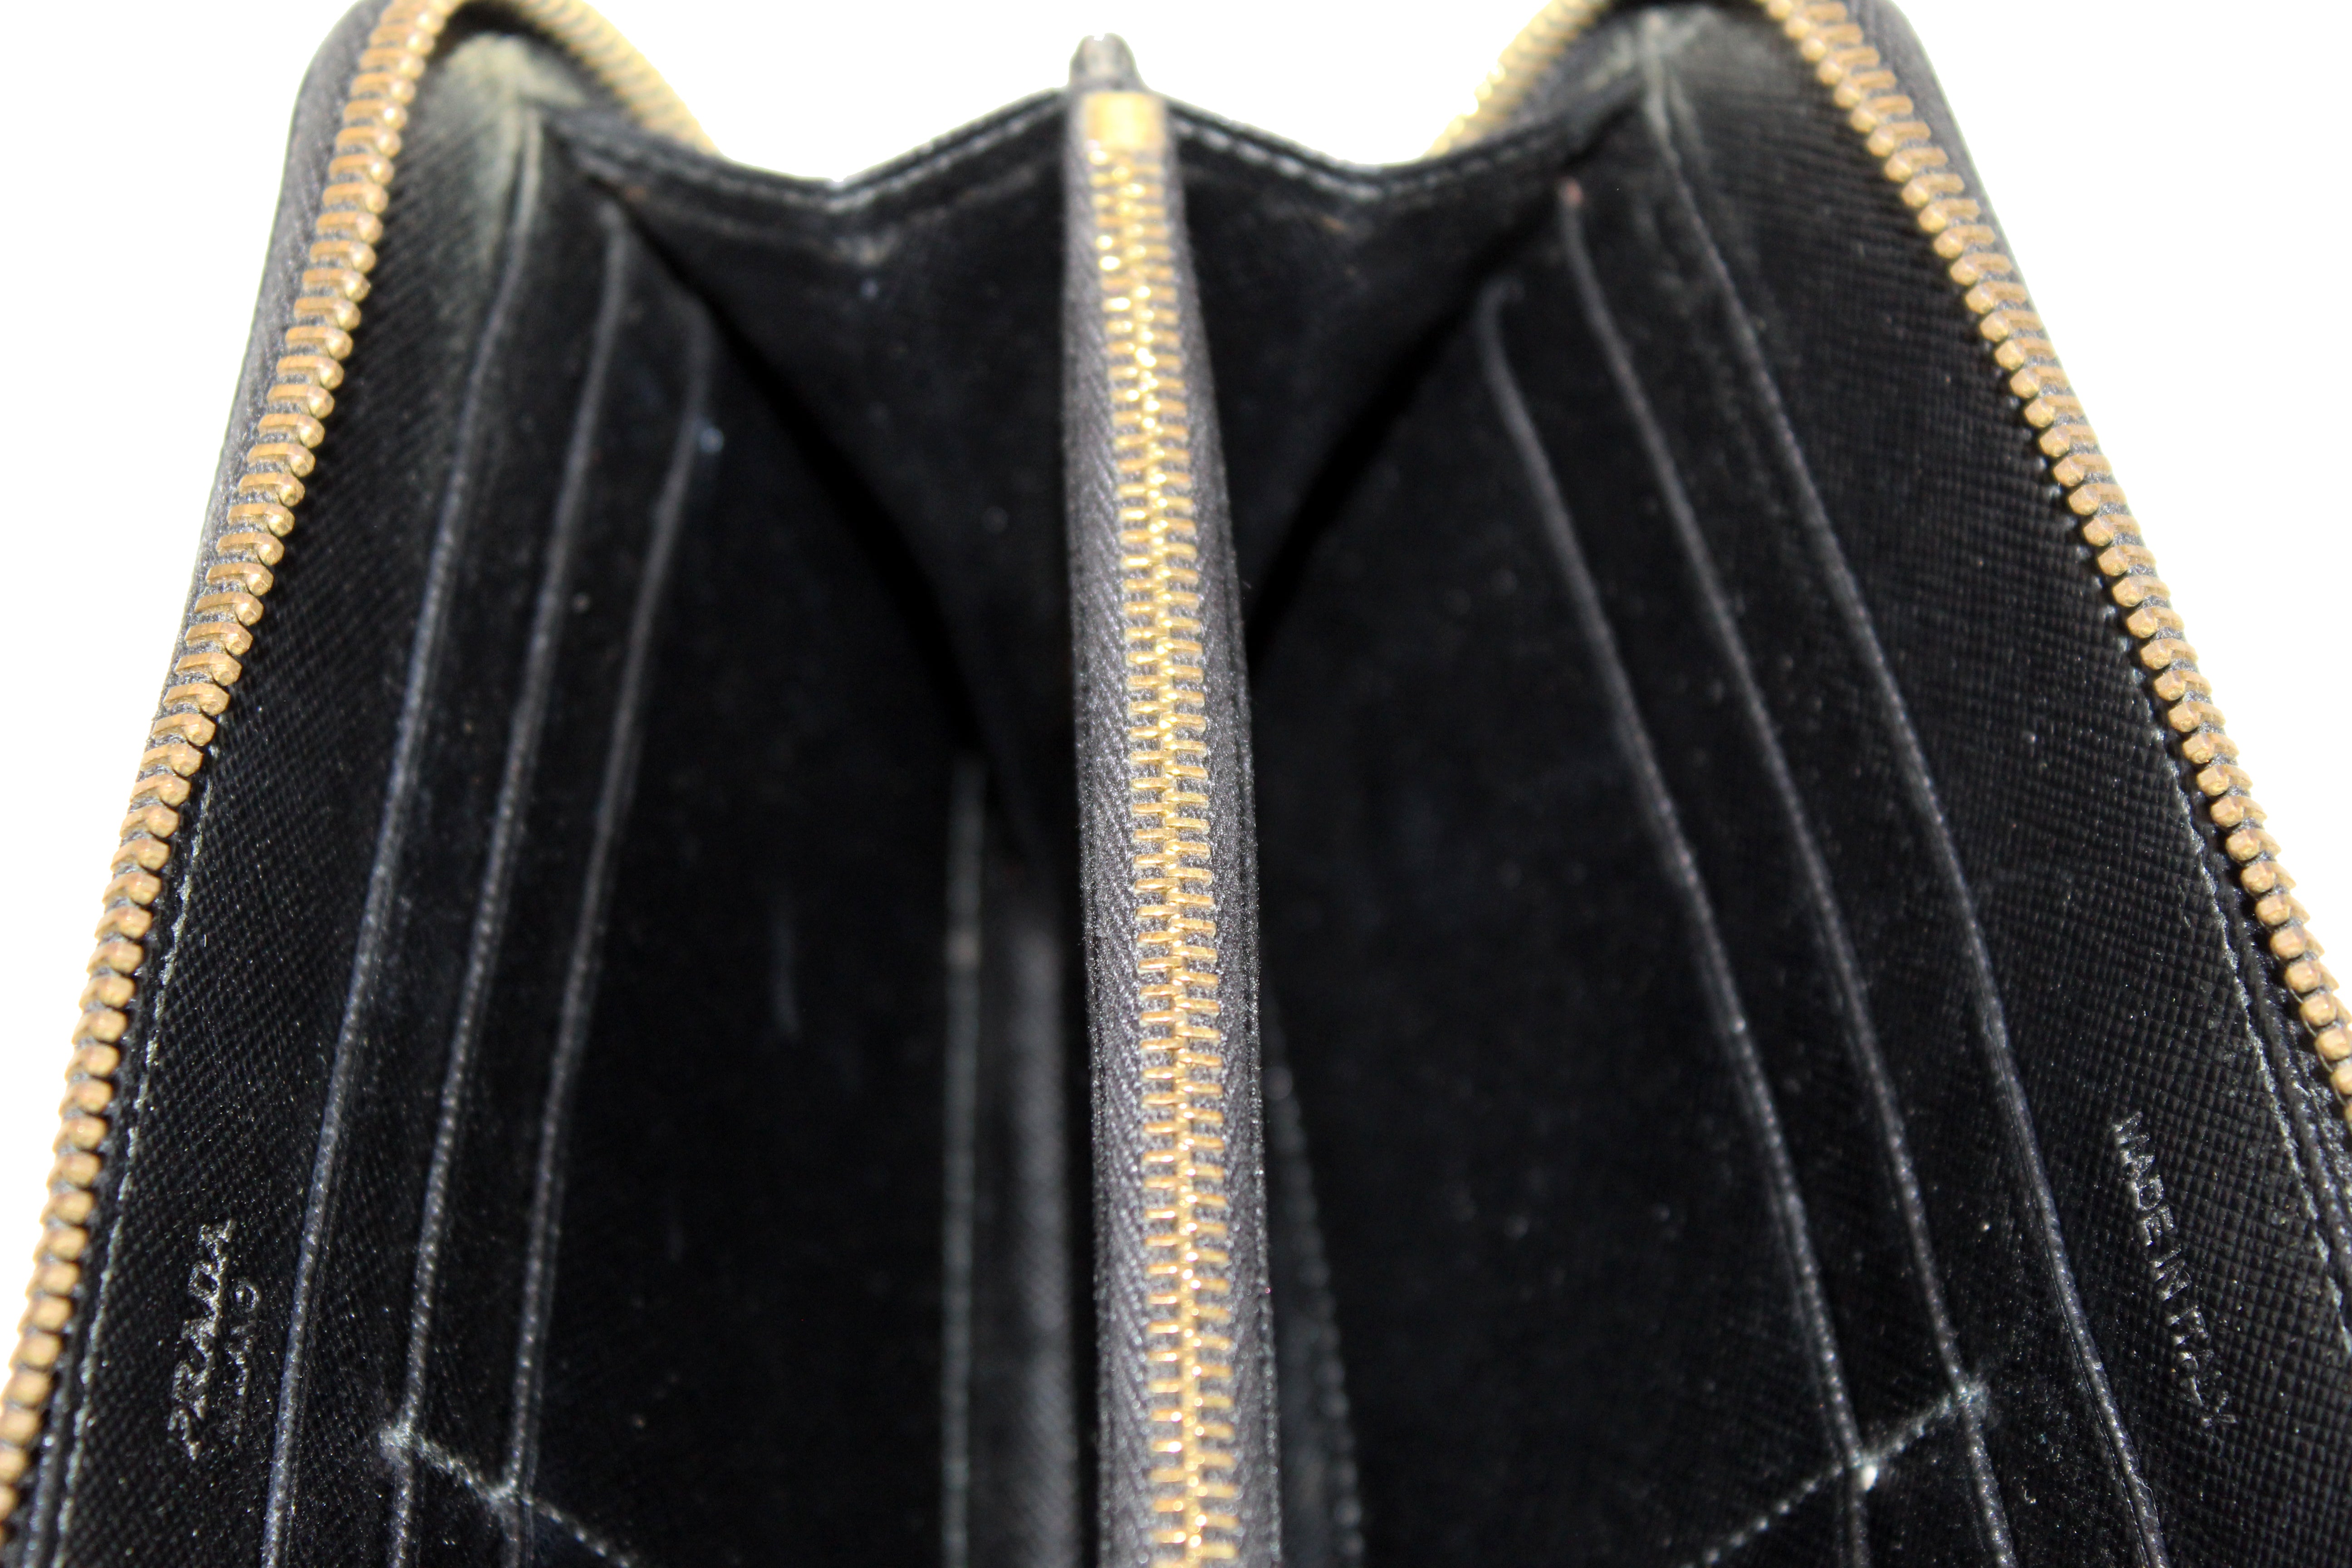 Authentic Prada Black Saffiano Leather Zippy Wallet